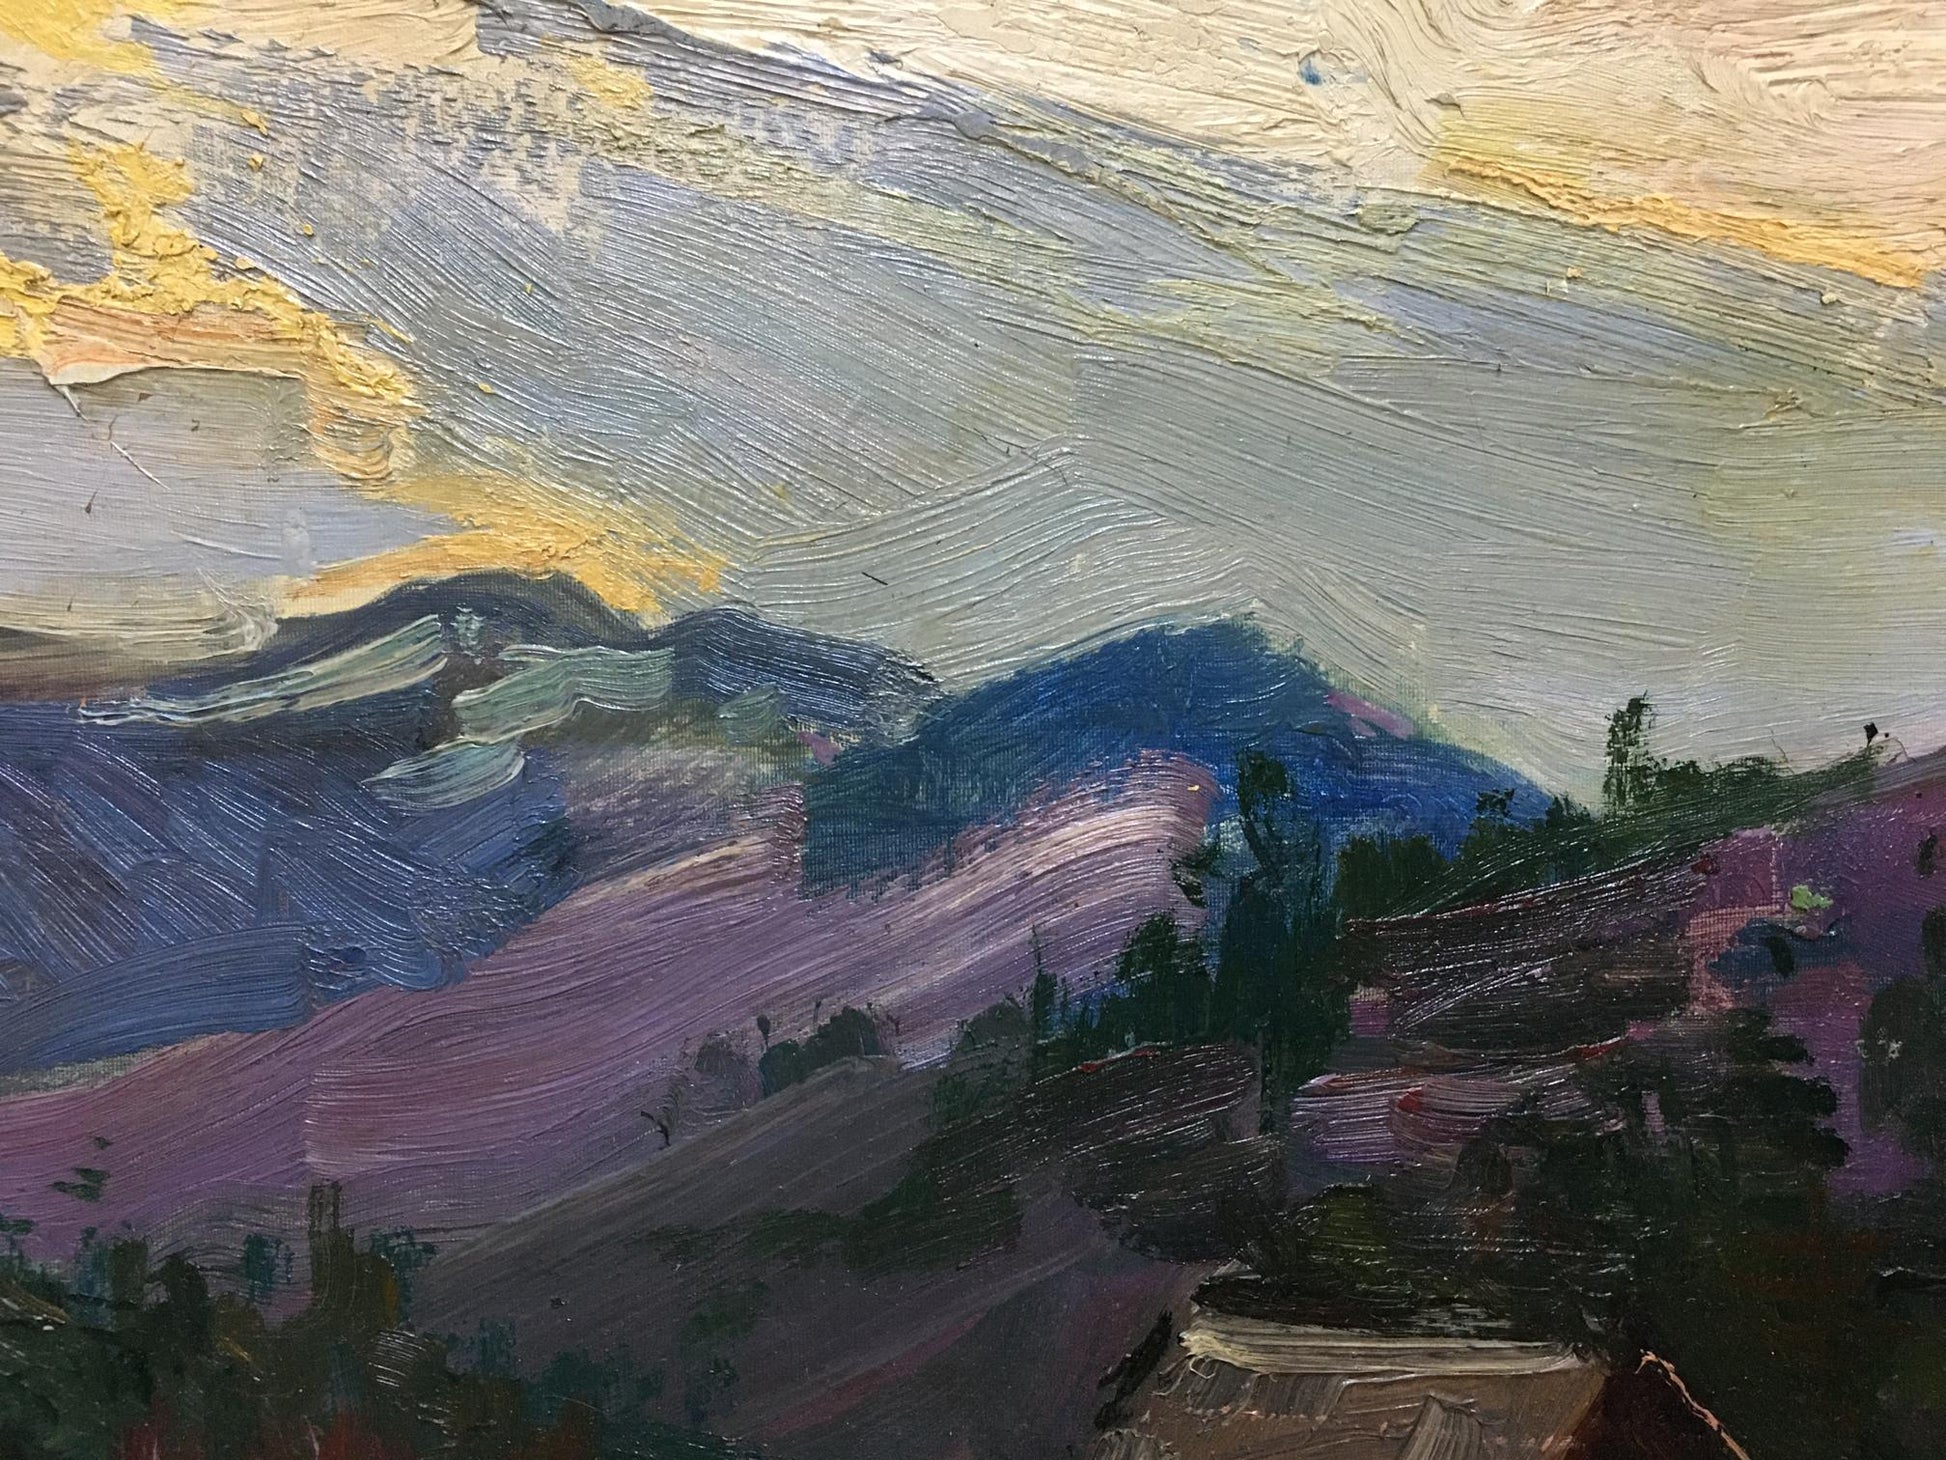 The mountain landscape captured in oils by Nikolay Petrovich Glushchenko